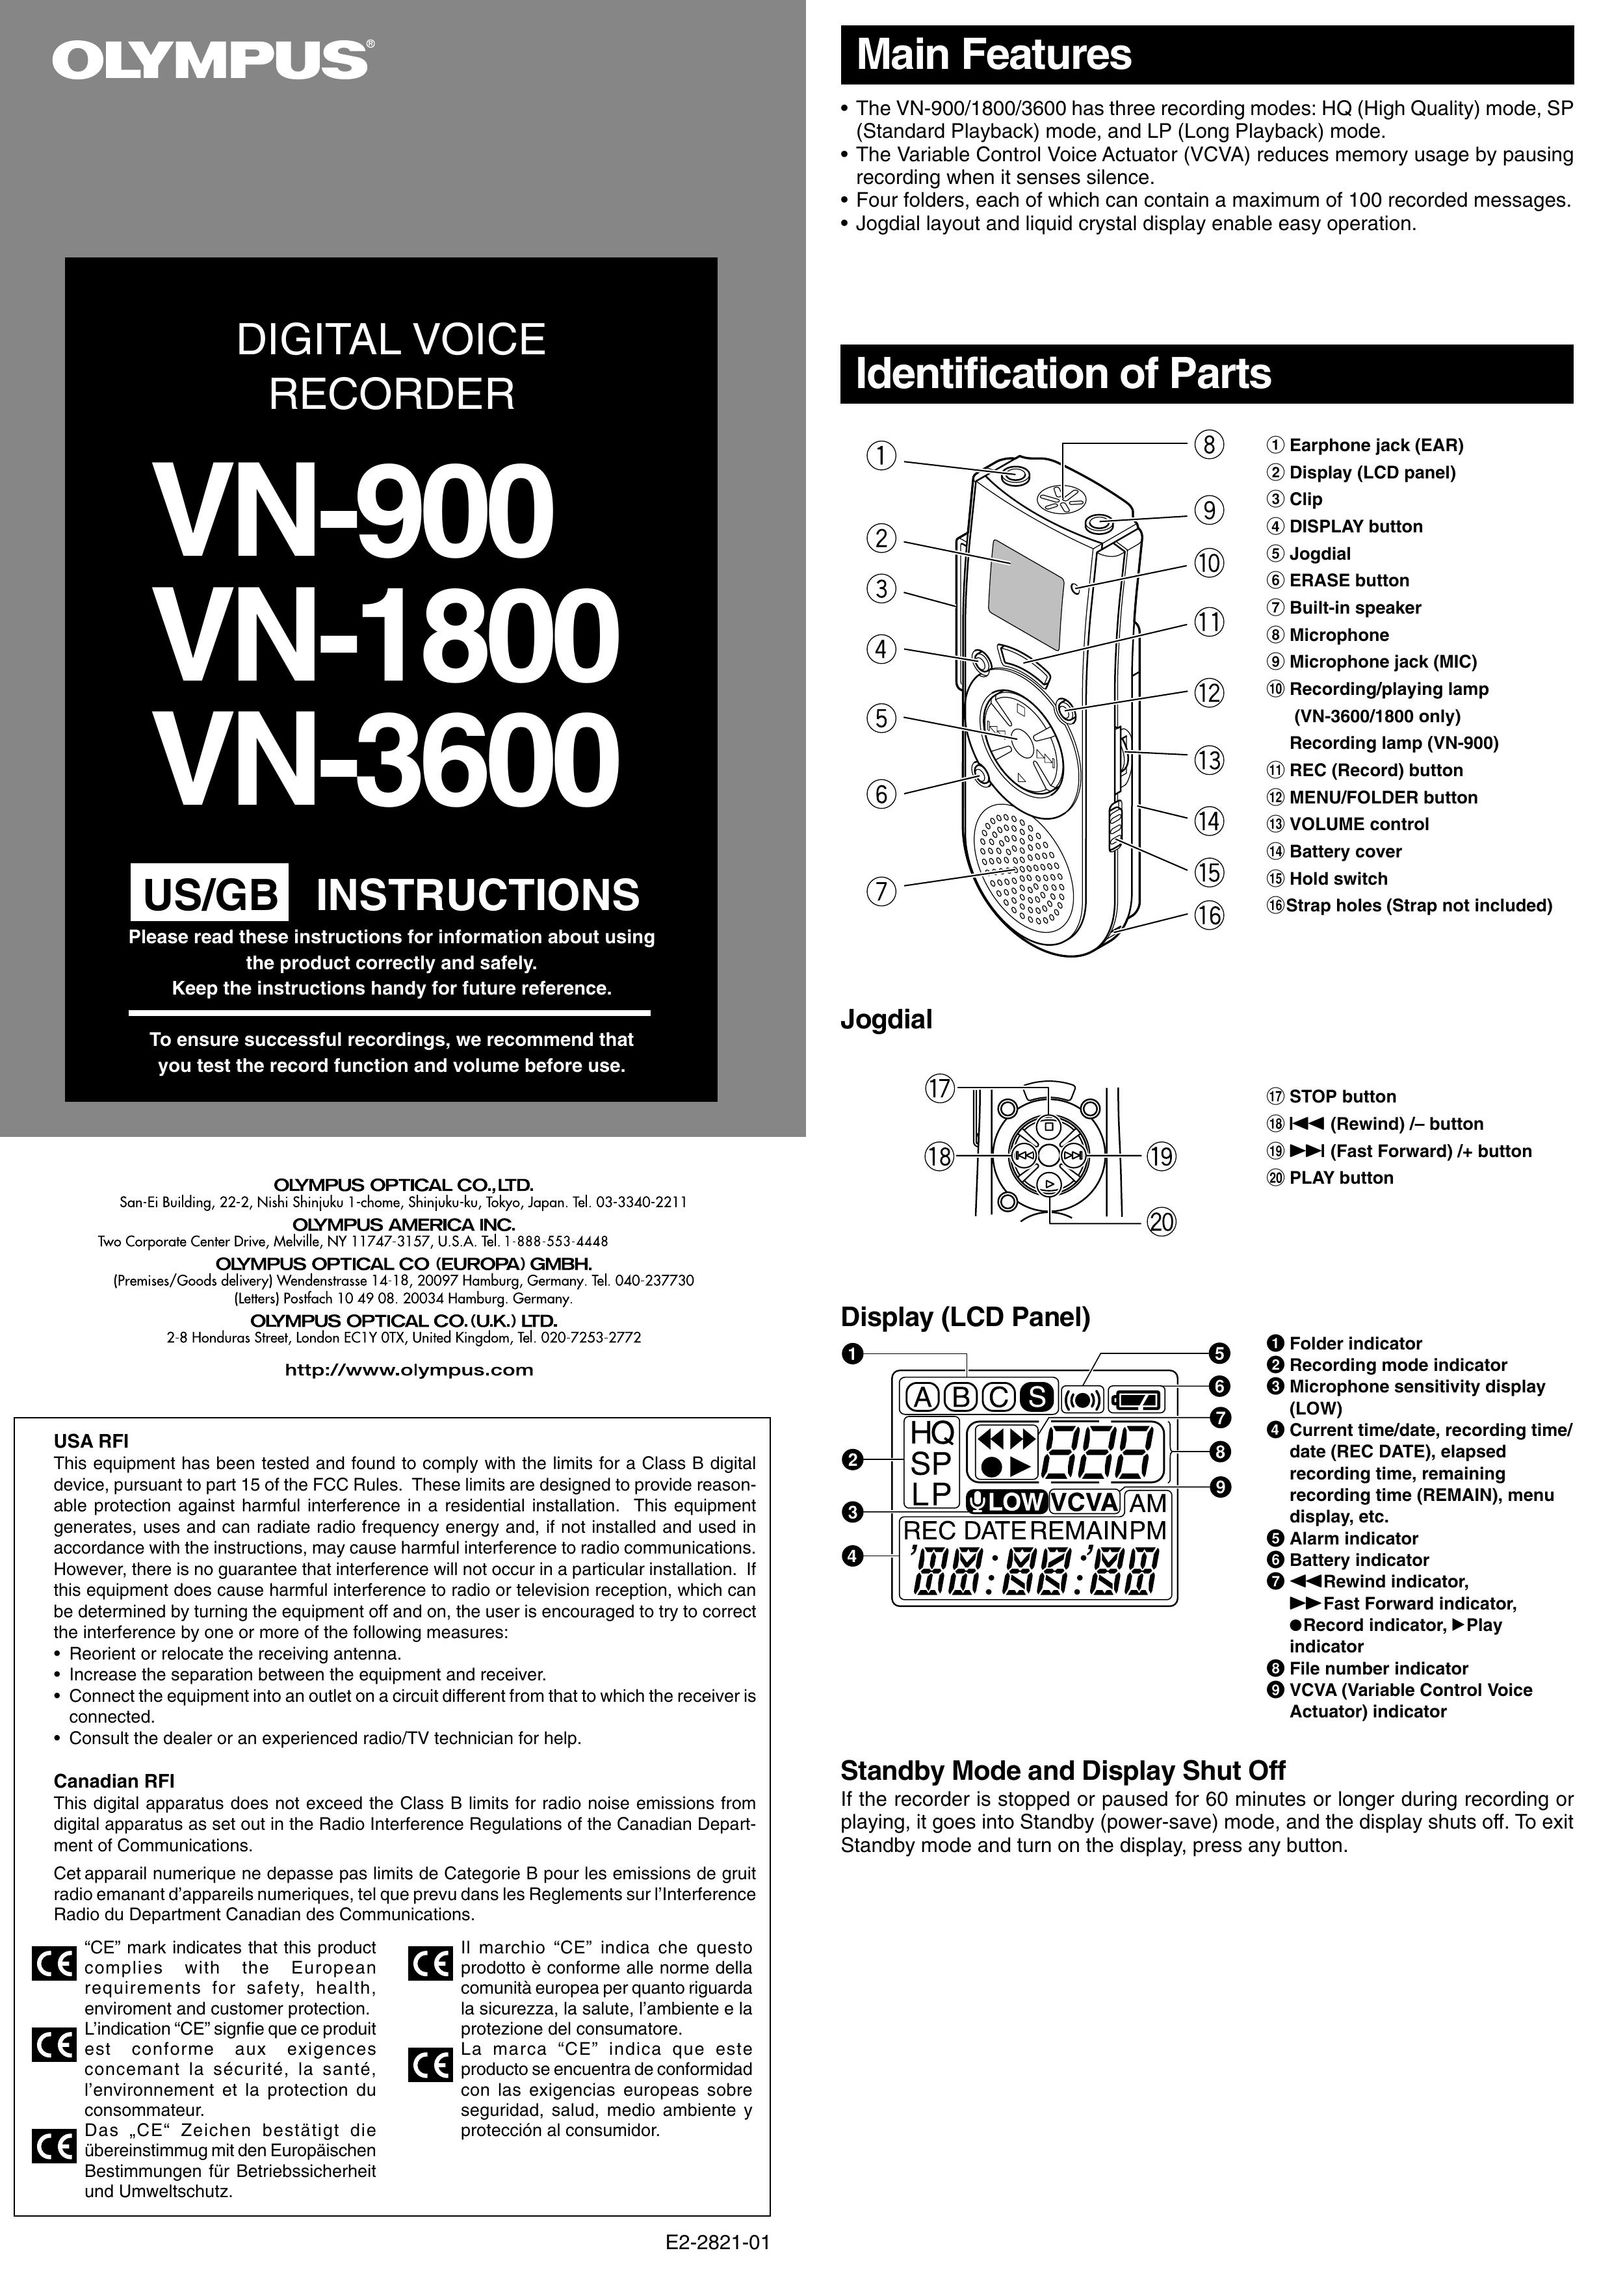 Olympus VN-1800 MP3 Player User Manual